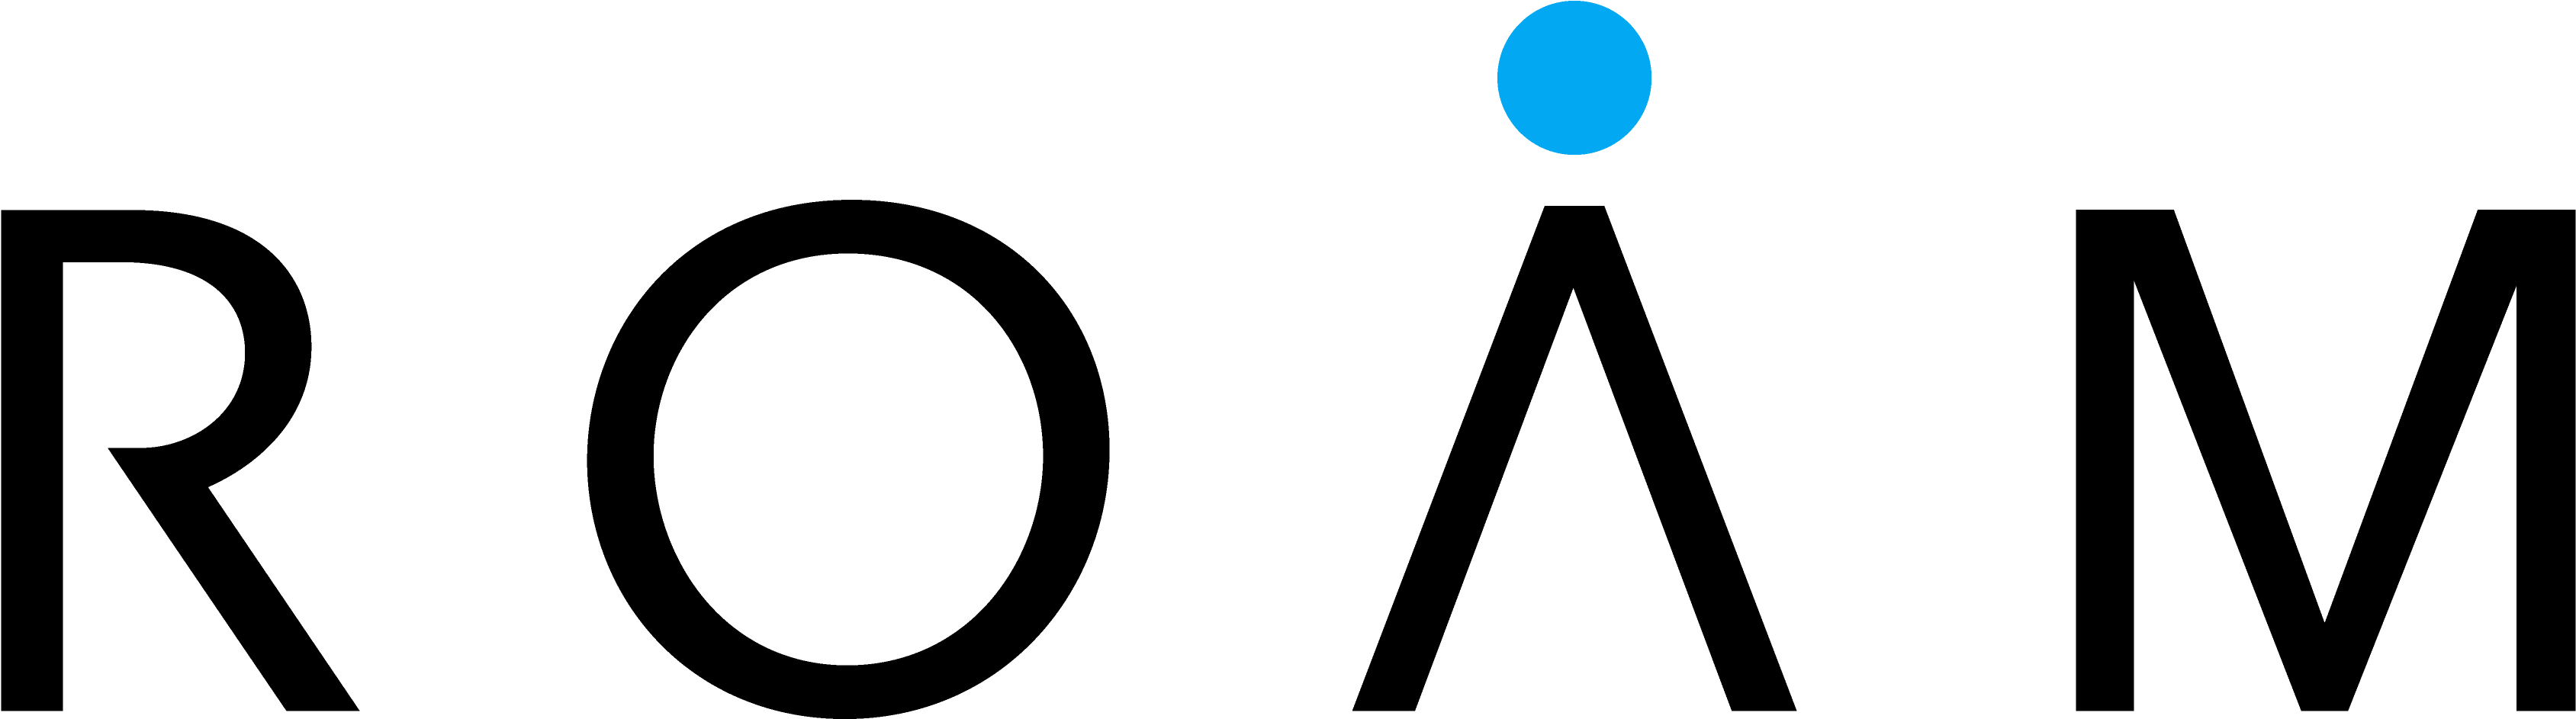 Roam Logo - Portable Network Graphics (3657x1105)